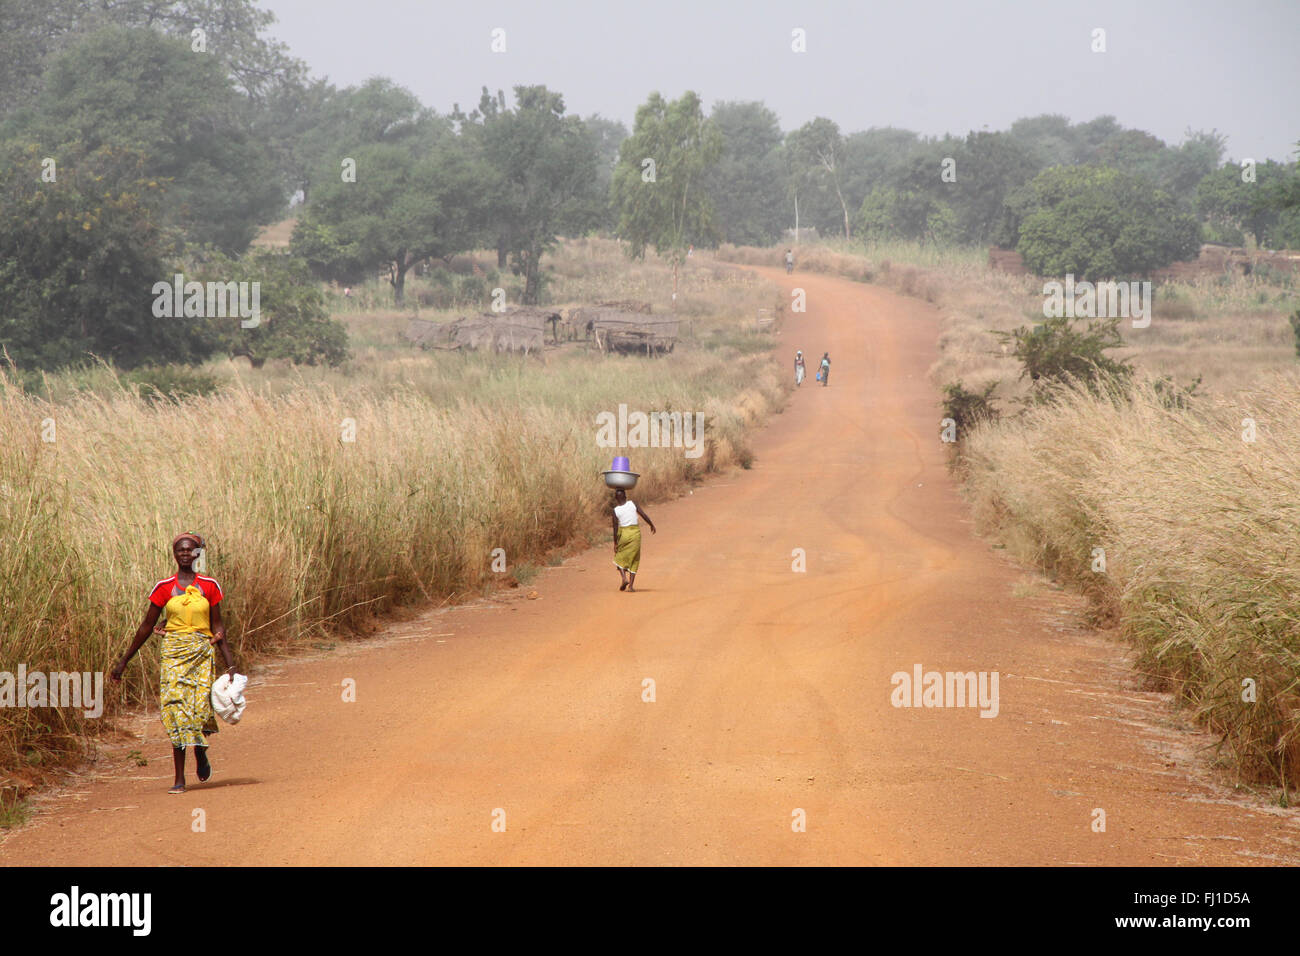 Typical landscape of Burkina Faso between Bobo Dioulasso and banfora - bush area Stock Photo